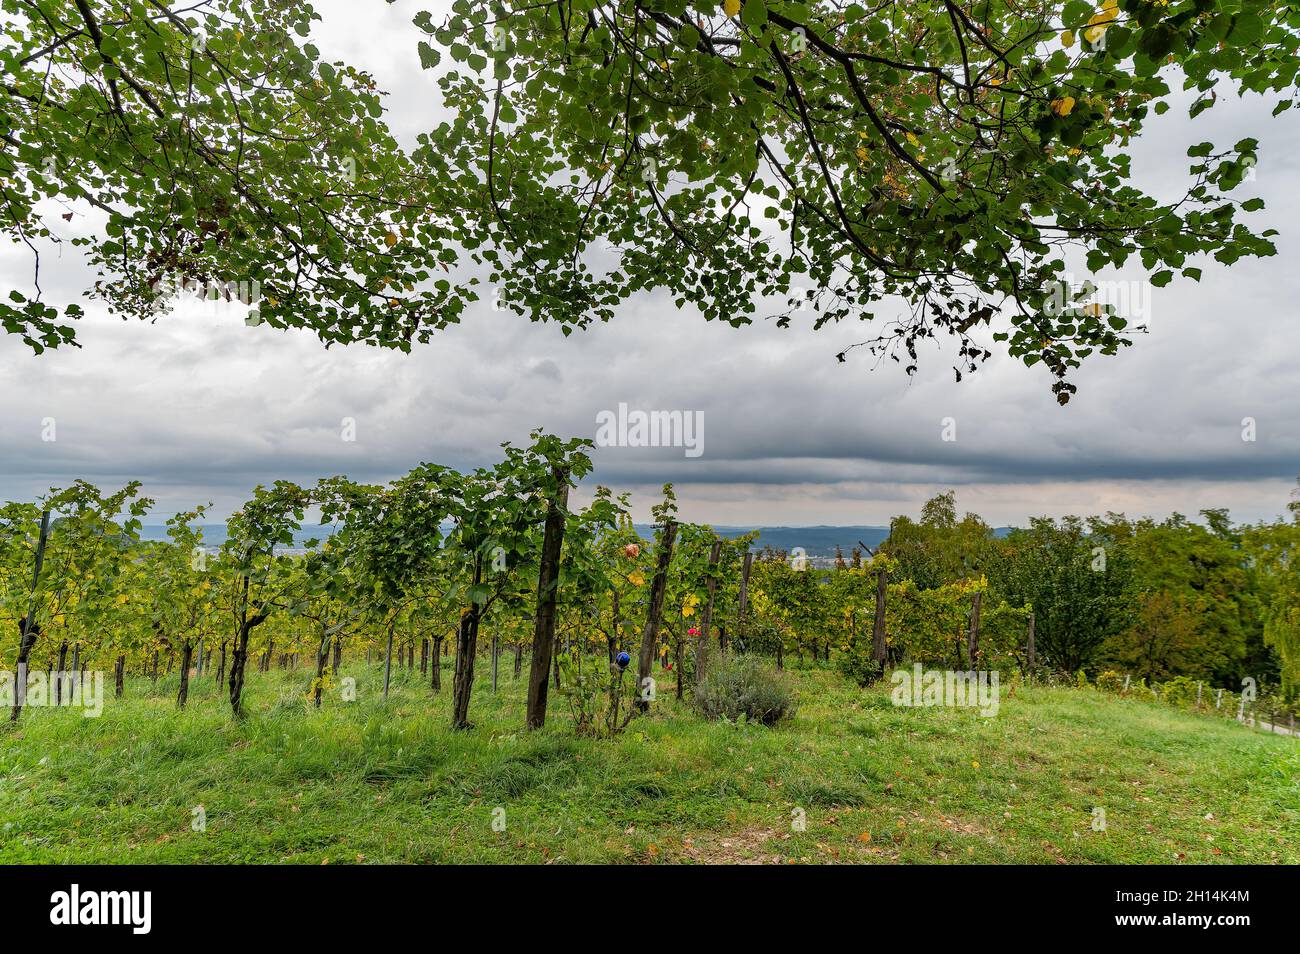 viticulture at Novi Vrh in Stajerska Slovenija, Slovenia Stock Photo